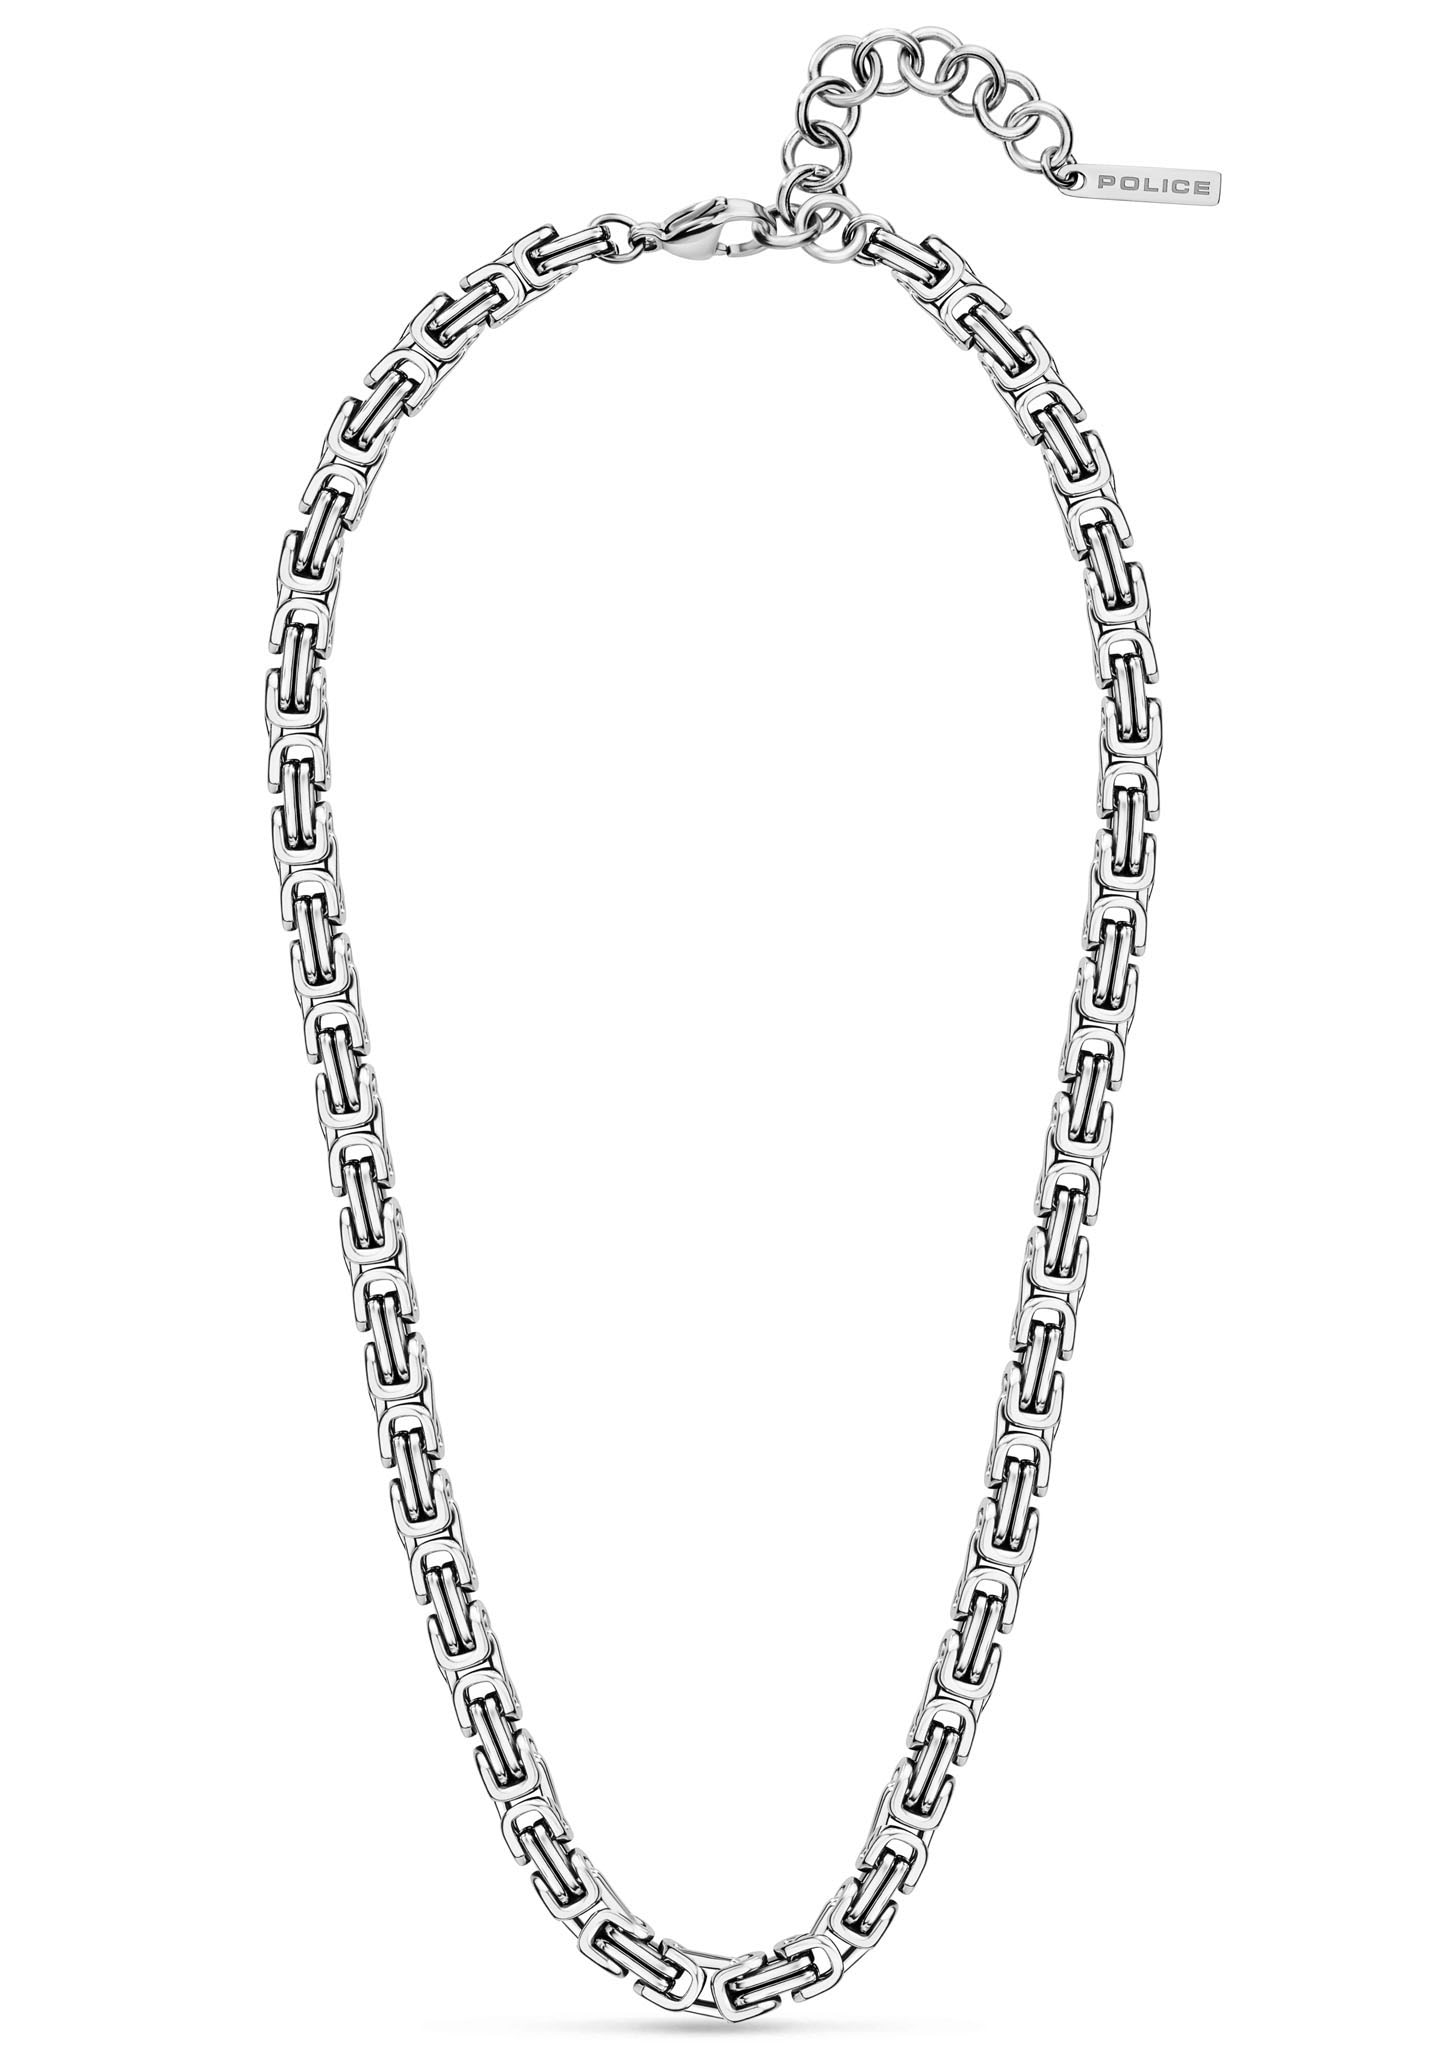 Police Halskette Kette mit Totenkopf-Anhänger PEAGN2212101